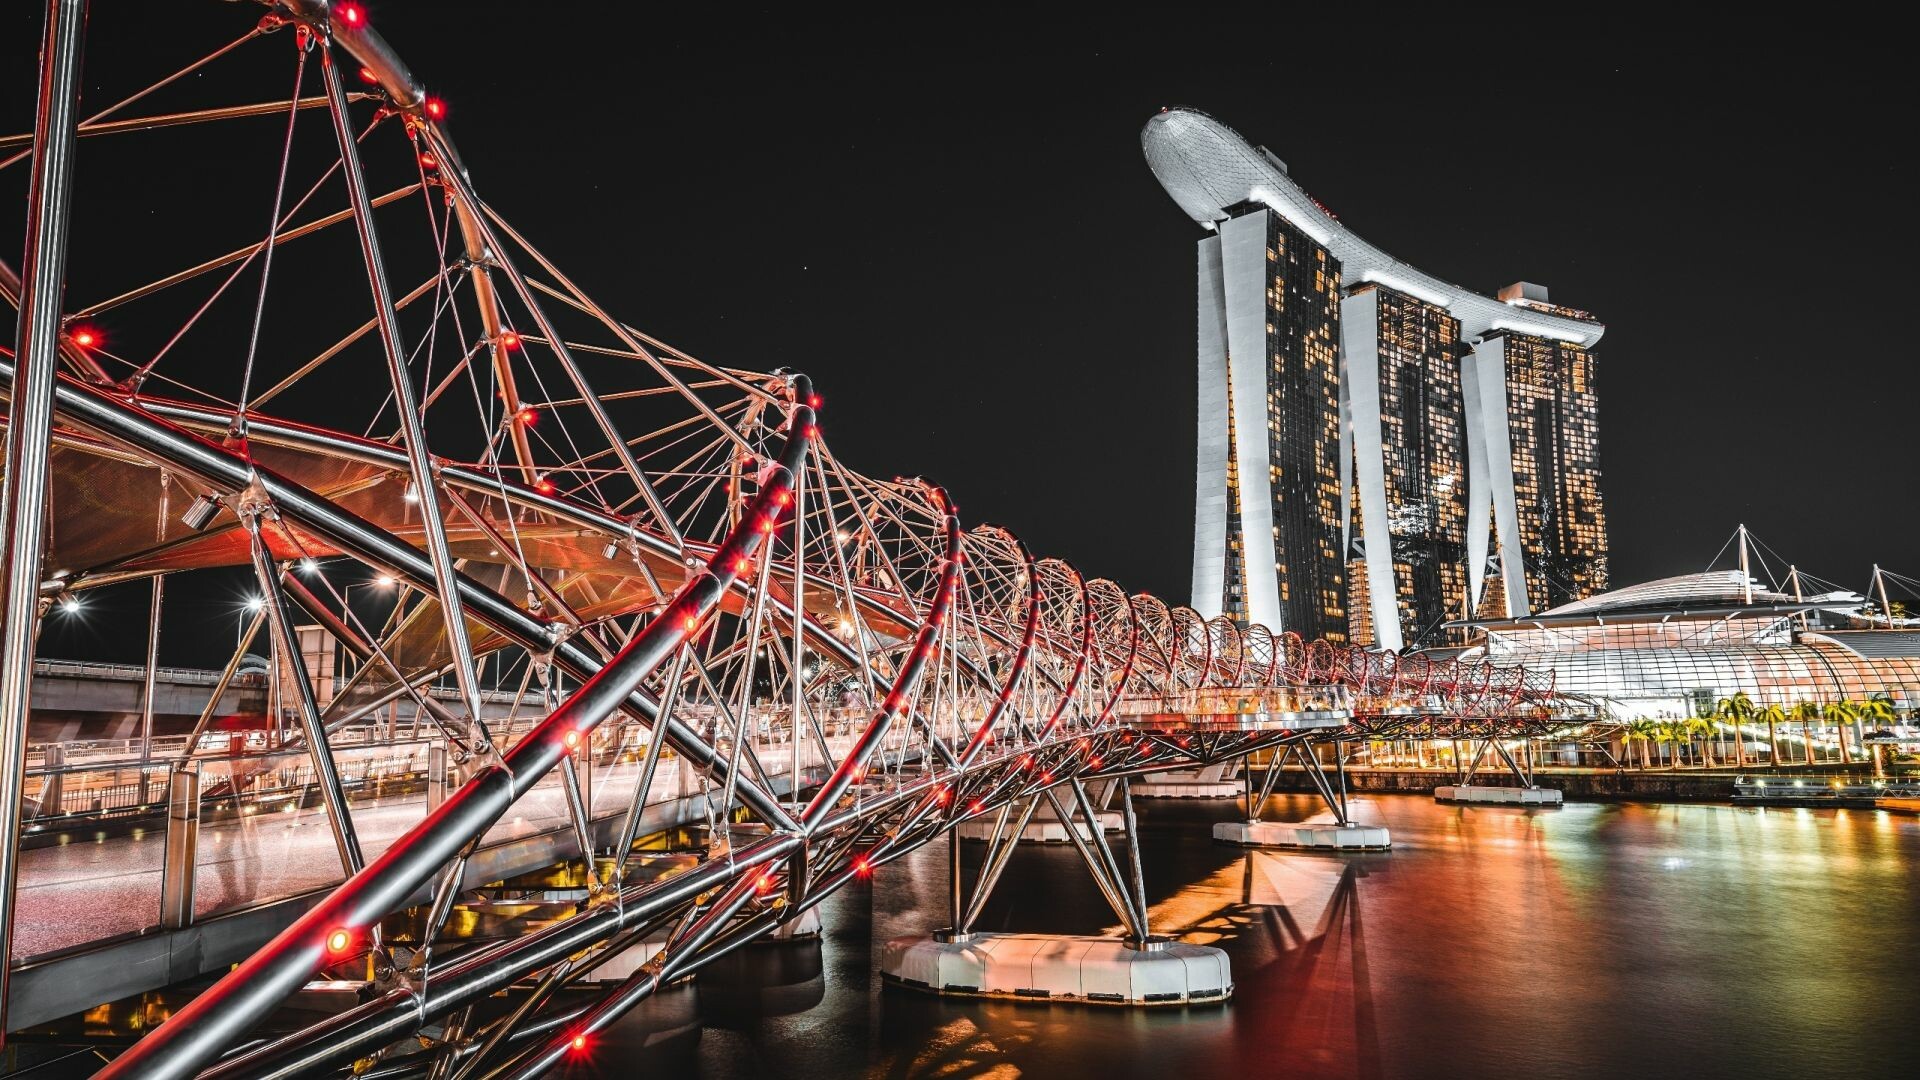 Singapore: Helix Bridge, A pedestrian bridge linking Marina Center with Marina South in the Marina Bay area. 1920x1080 Full HD Wallpaper.